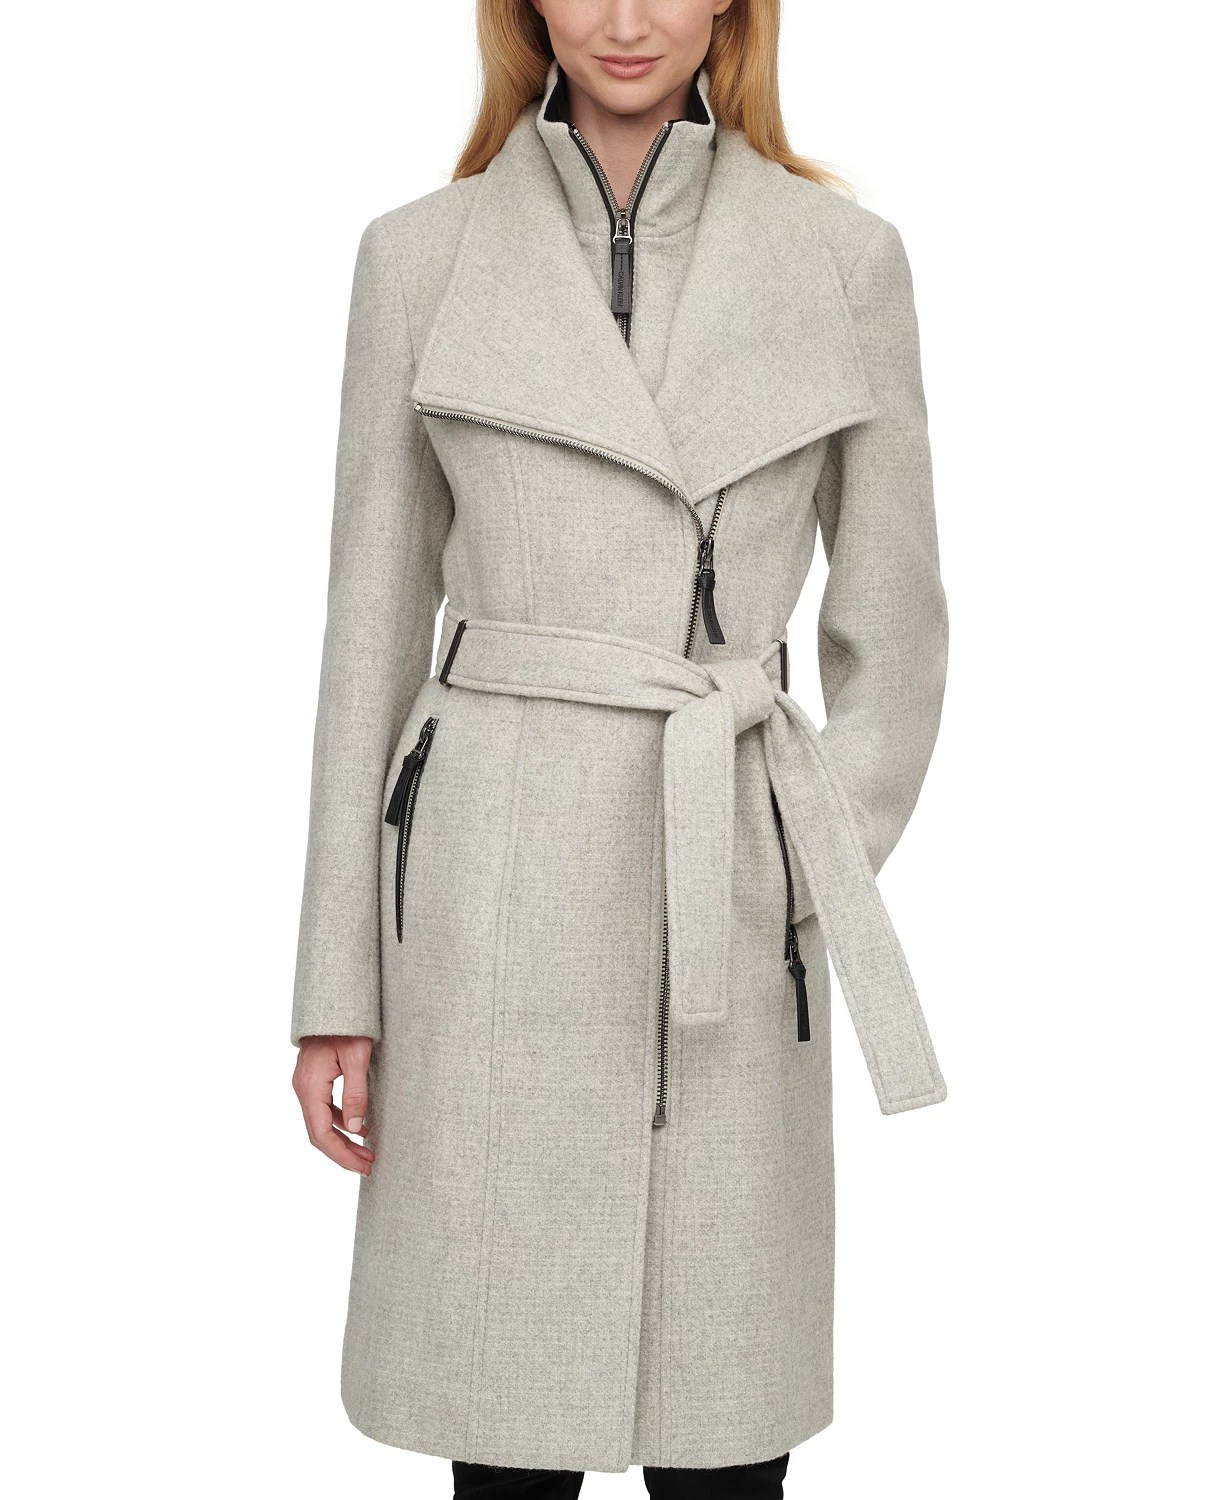 Macy's Winter Coats Factory Sale | bellvalefarms.com